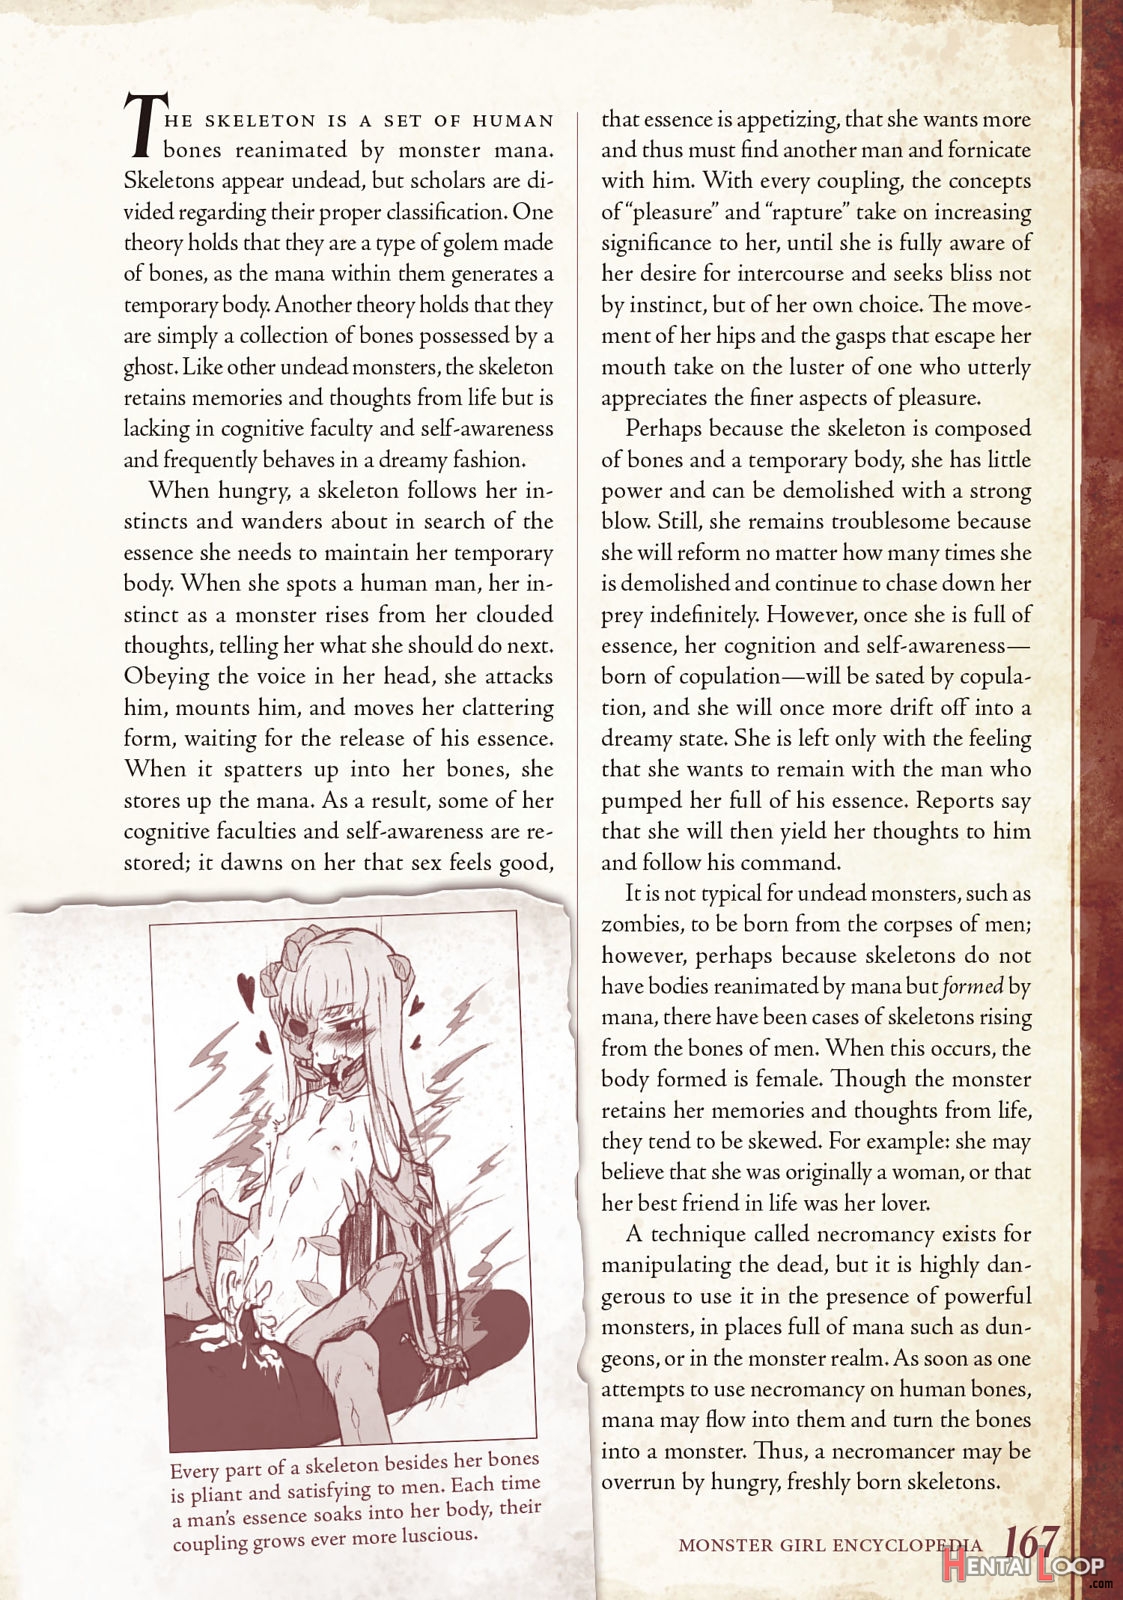 Monster Girl Encyclopedia Vol. 1 page 168